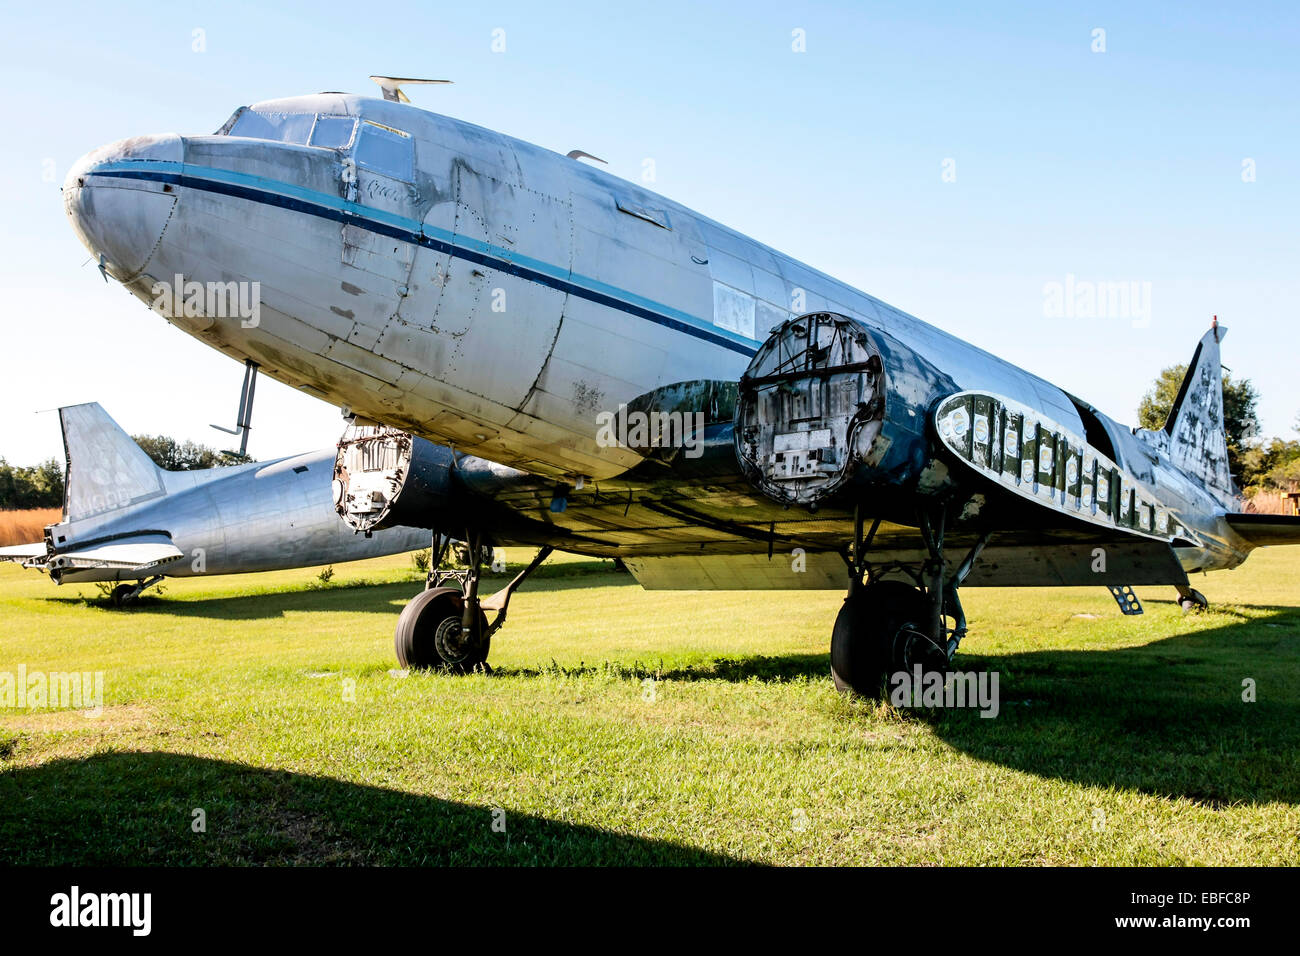 A group of Douglas DC-3 aircraft at an aviation junkyard in Florida Stock Photo